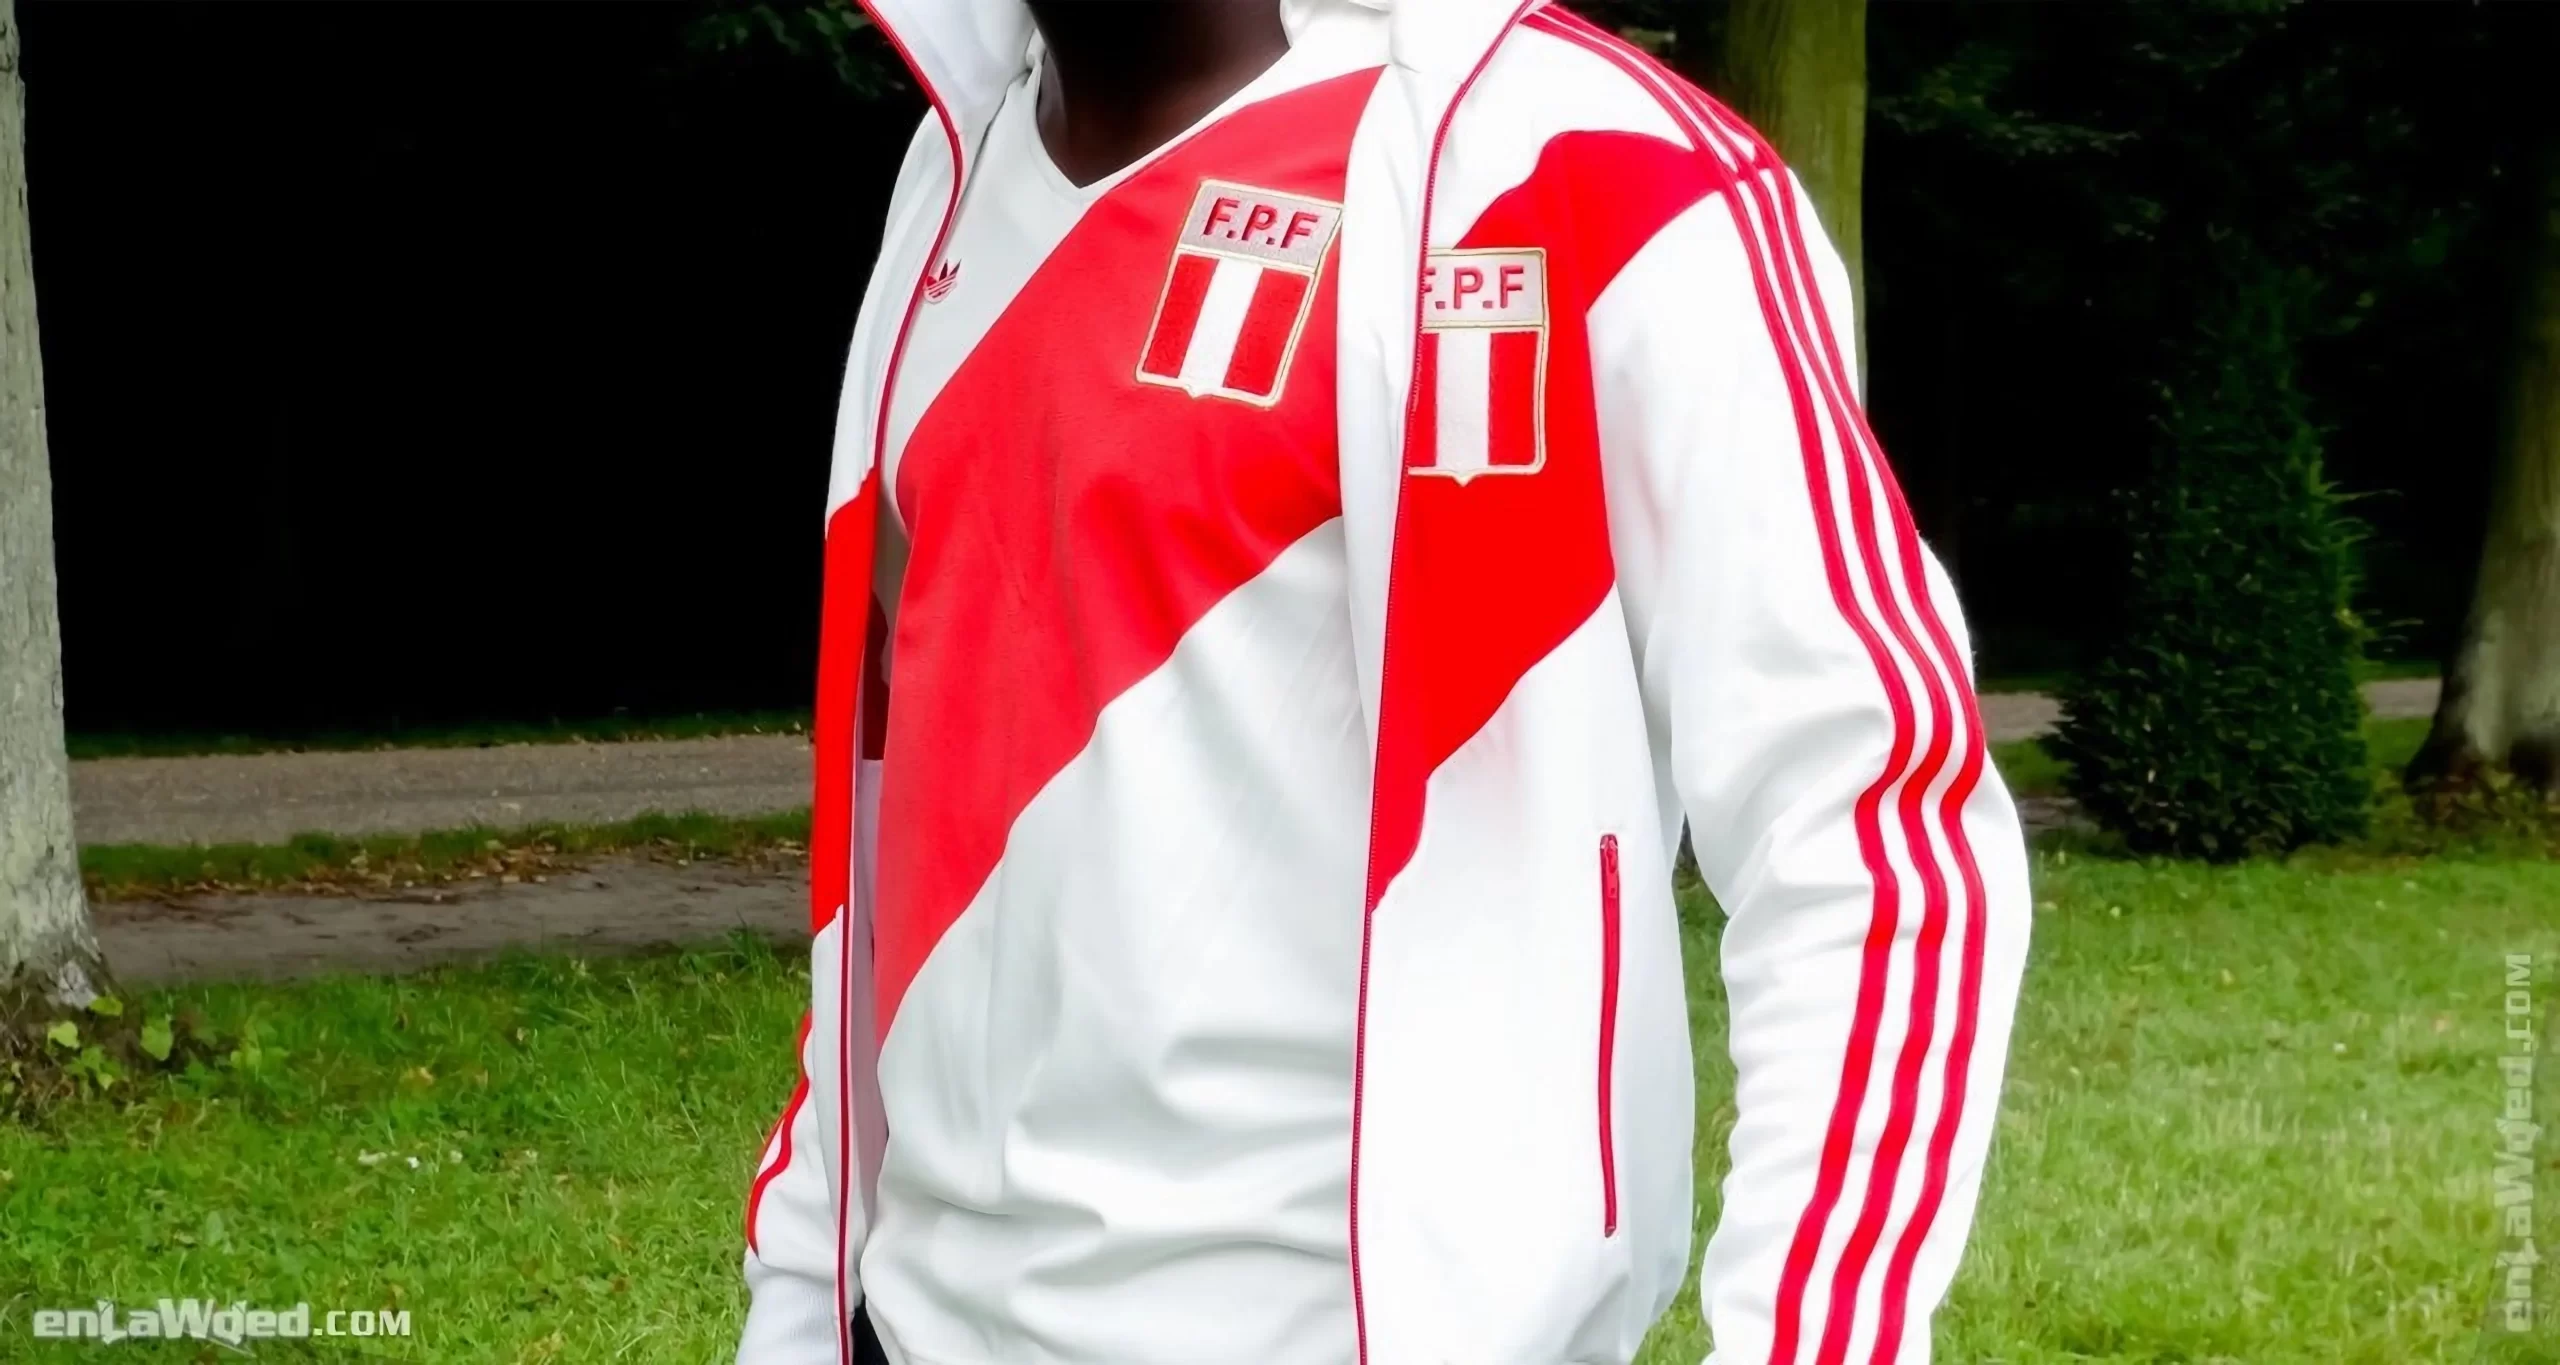 Men’s 2005 Peru ’78 Cubillas TT by Adidas Originals: Definitely (EnLawded.com file #lmc4nguan2genxyt0pn)